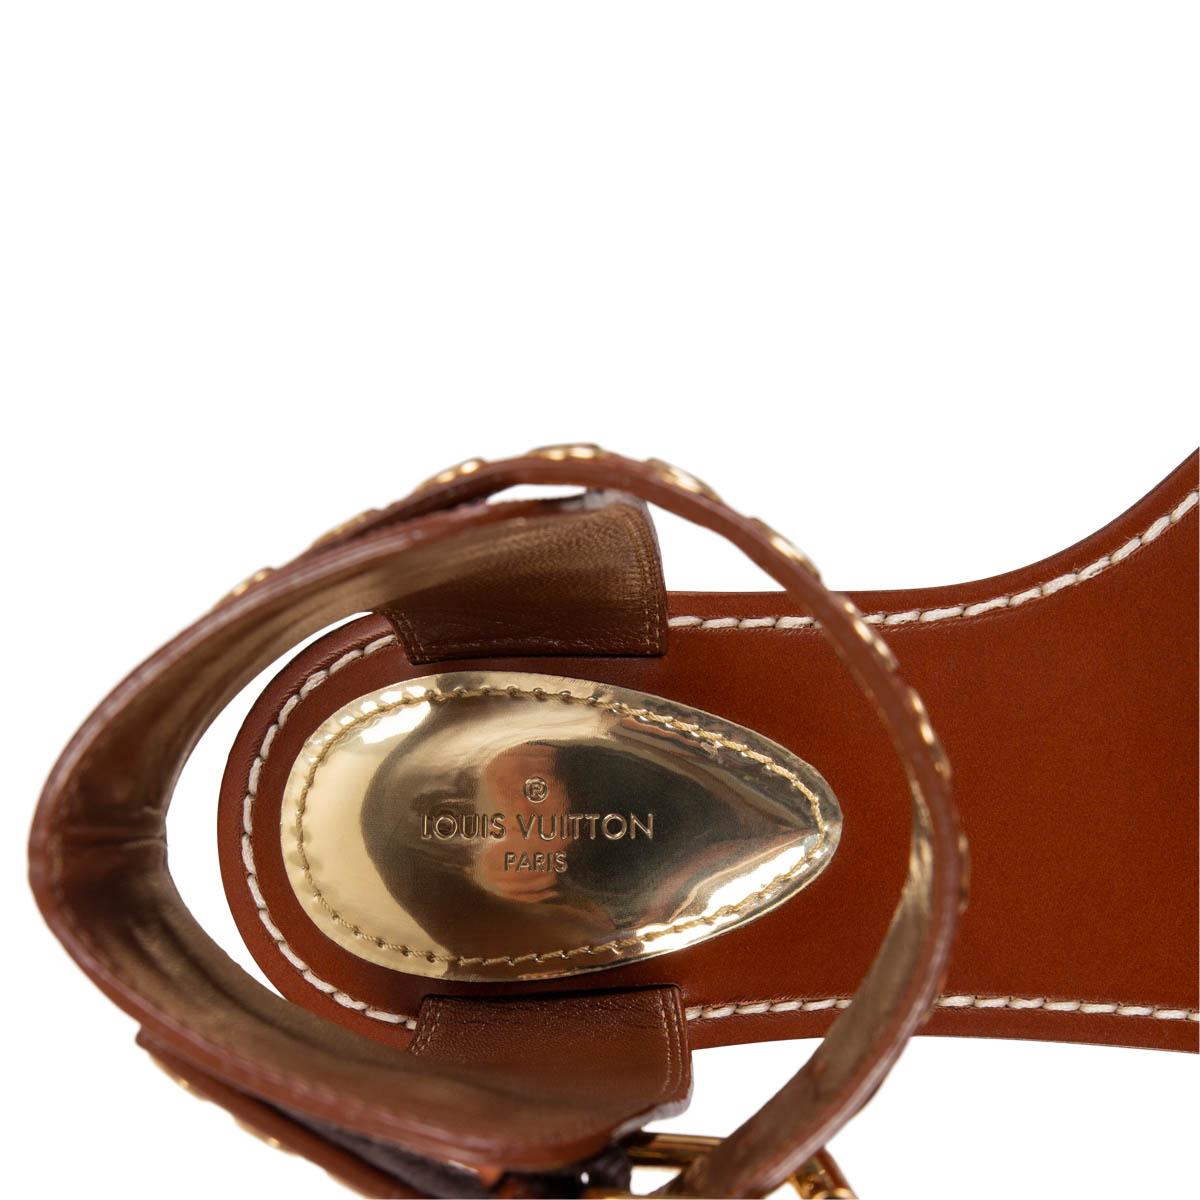 Brown LOUIS VUITTON brown leather & monogram PASSENGER Flat Sandals Shoes 38